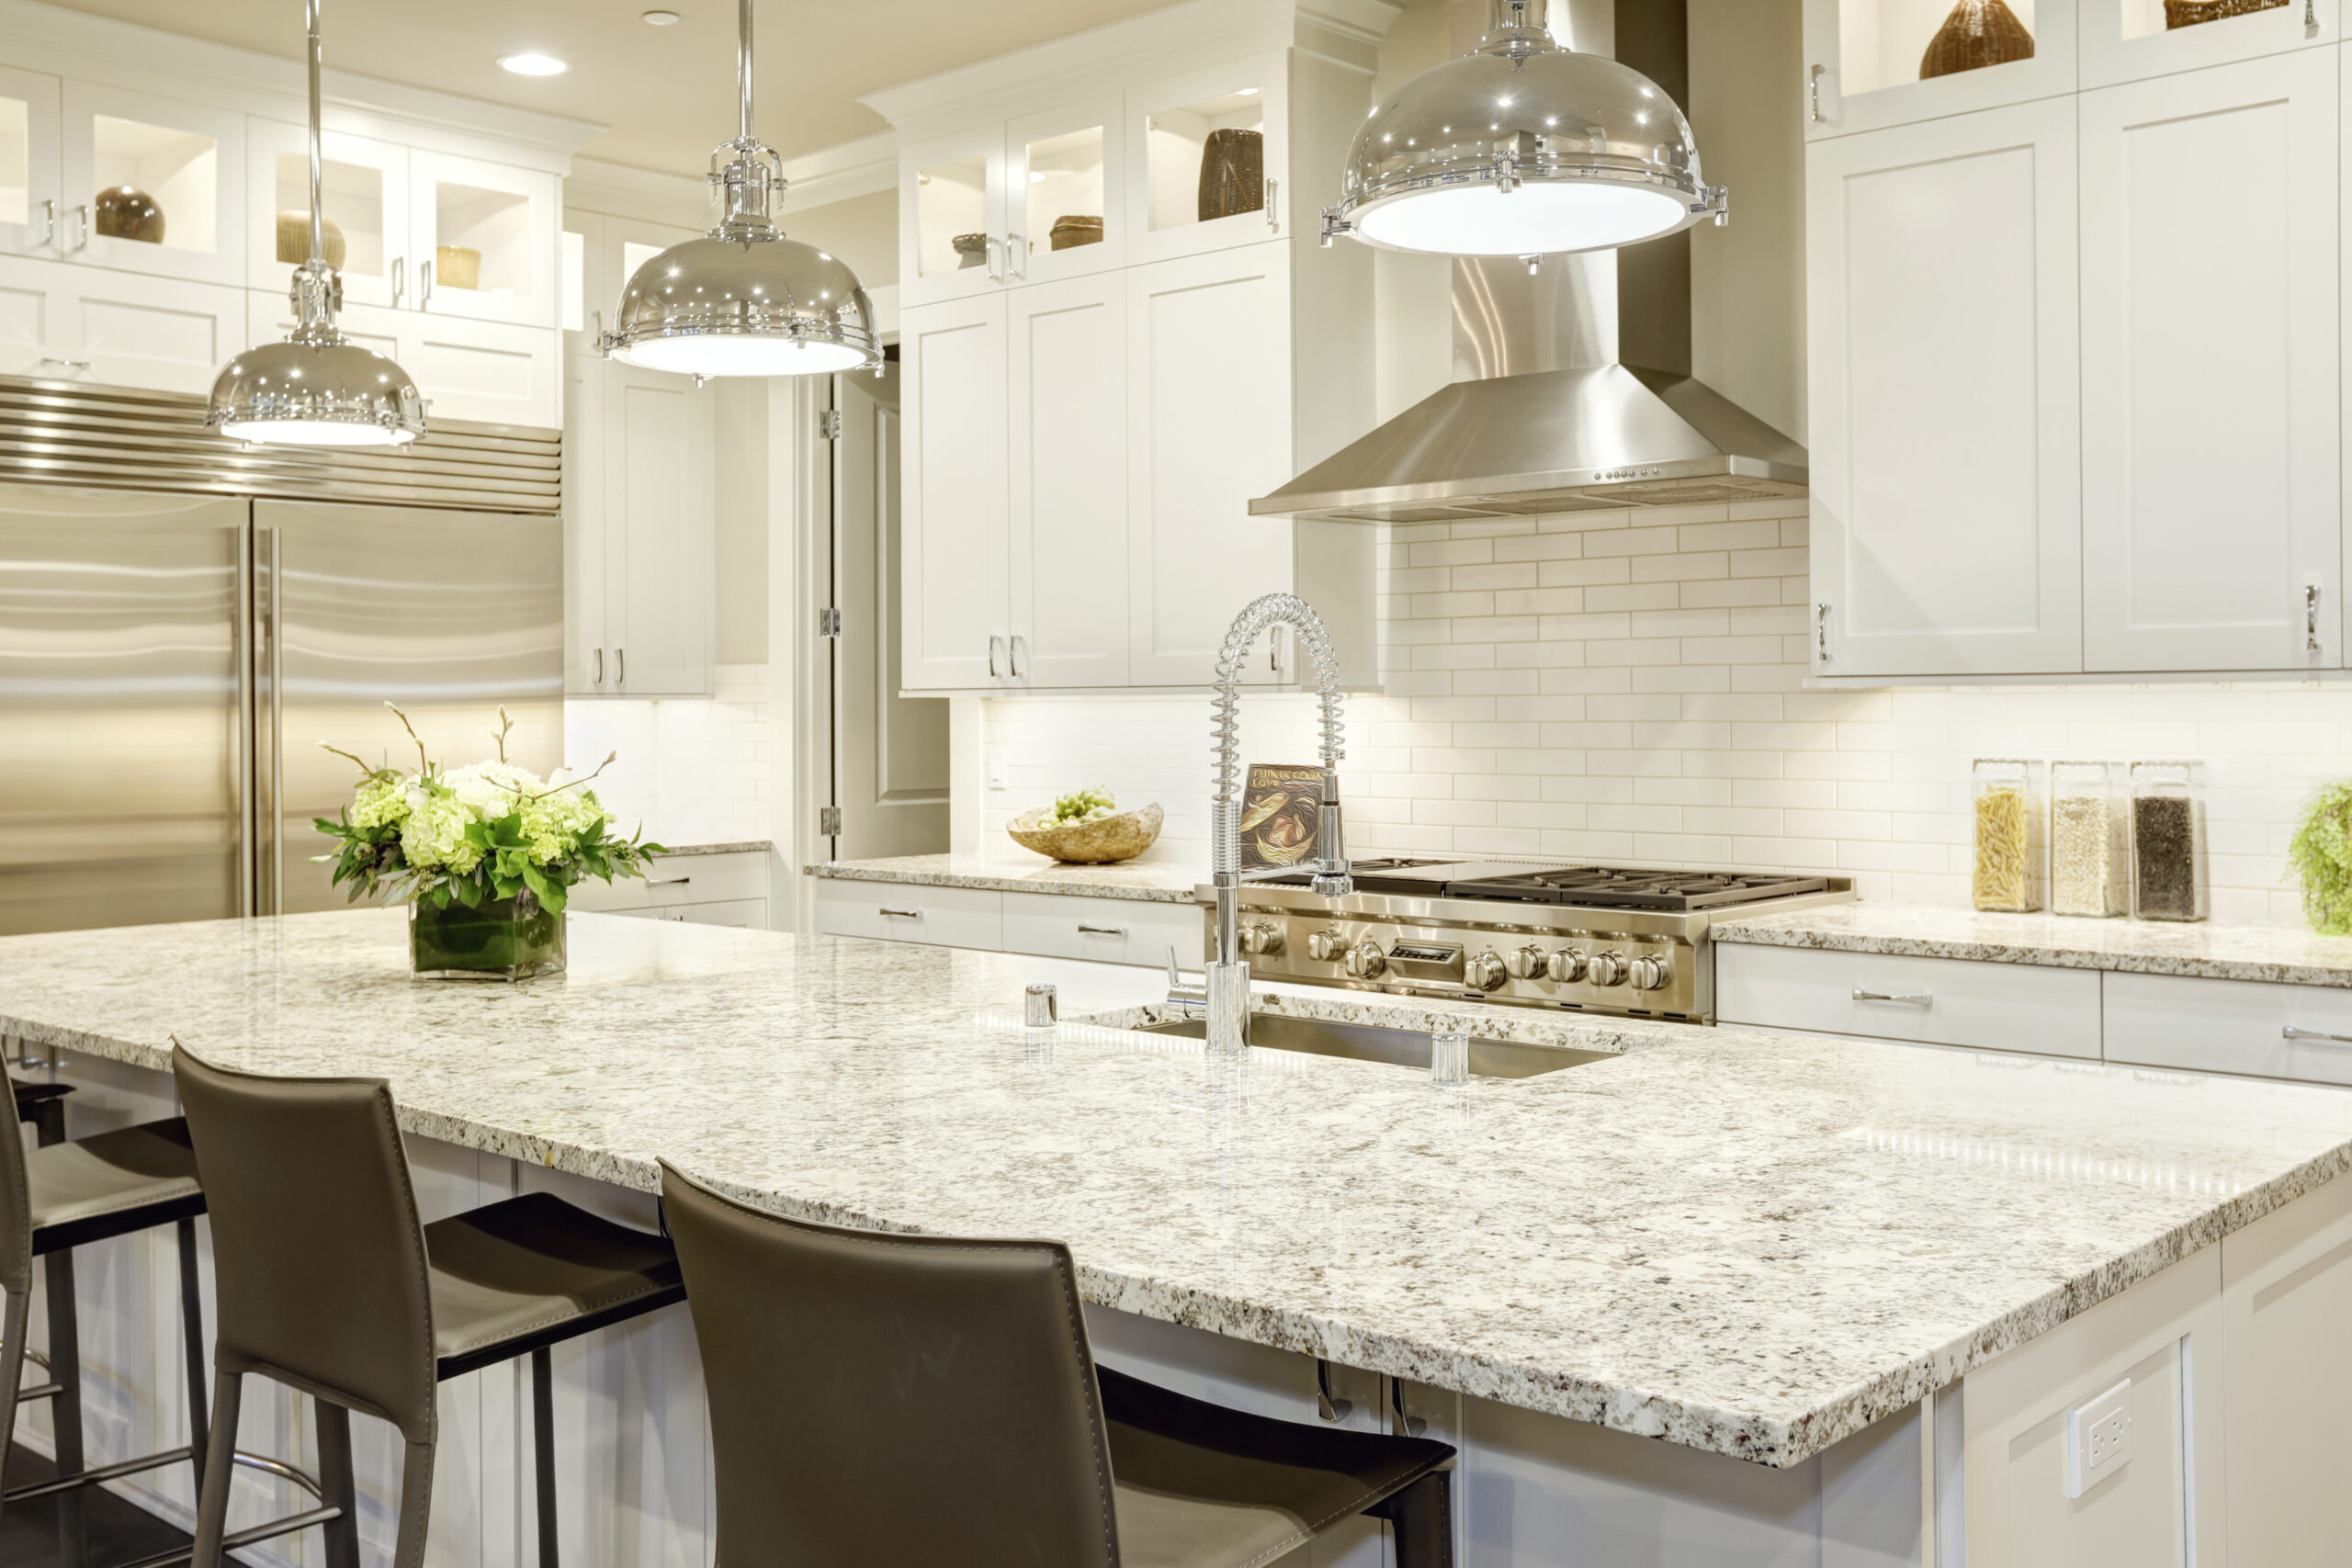 https://www.lxhausys.com/us/blog/wp-content/uploads/2022/11/01-Granite-kitchen-countertop-scaled.jpg